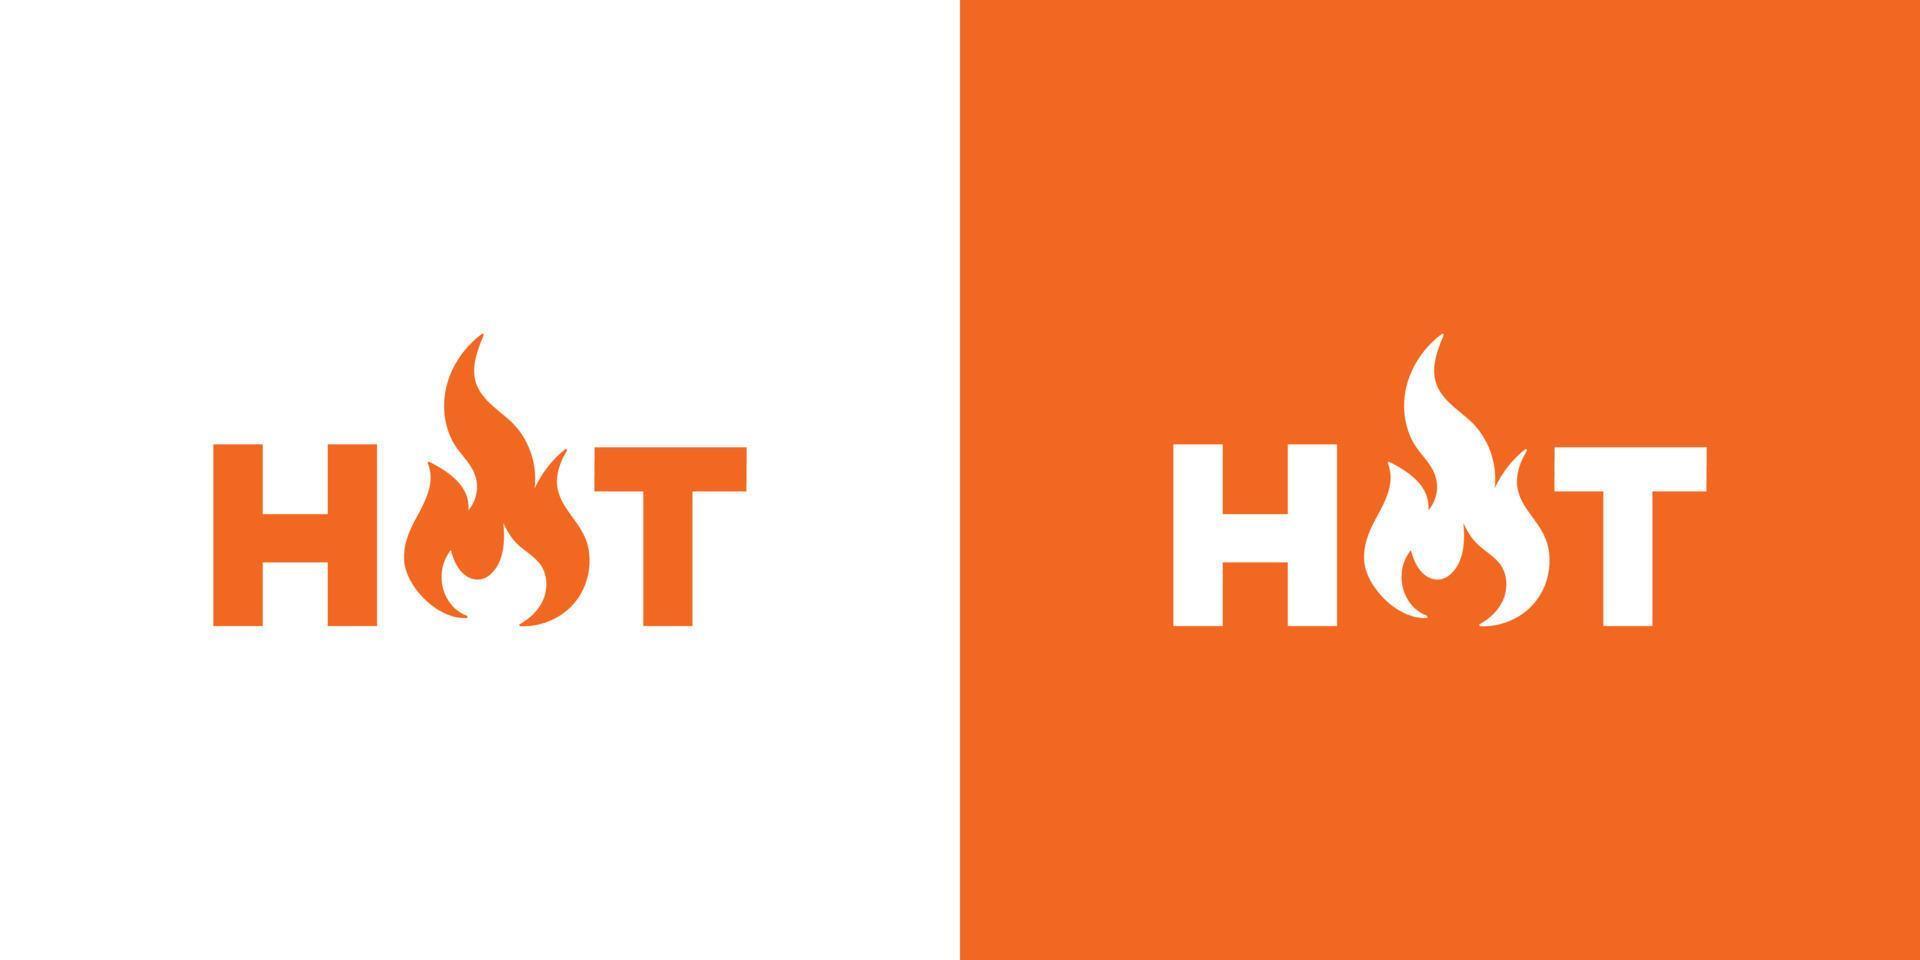 modern and professional hot fire logo text design vector